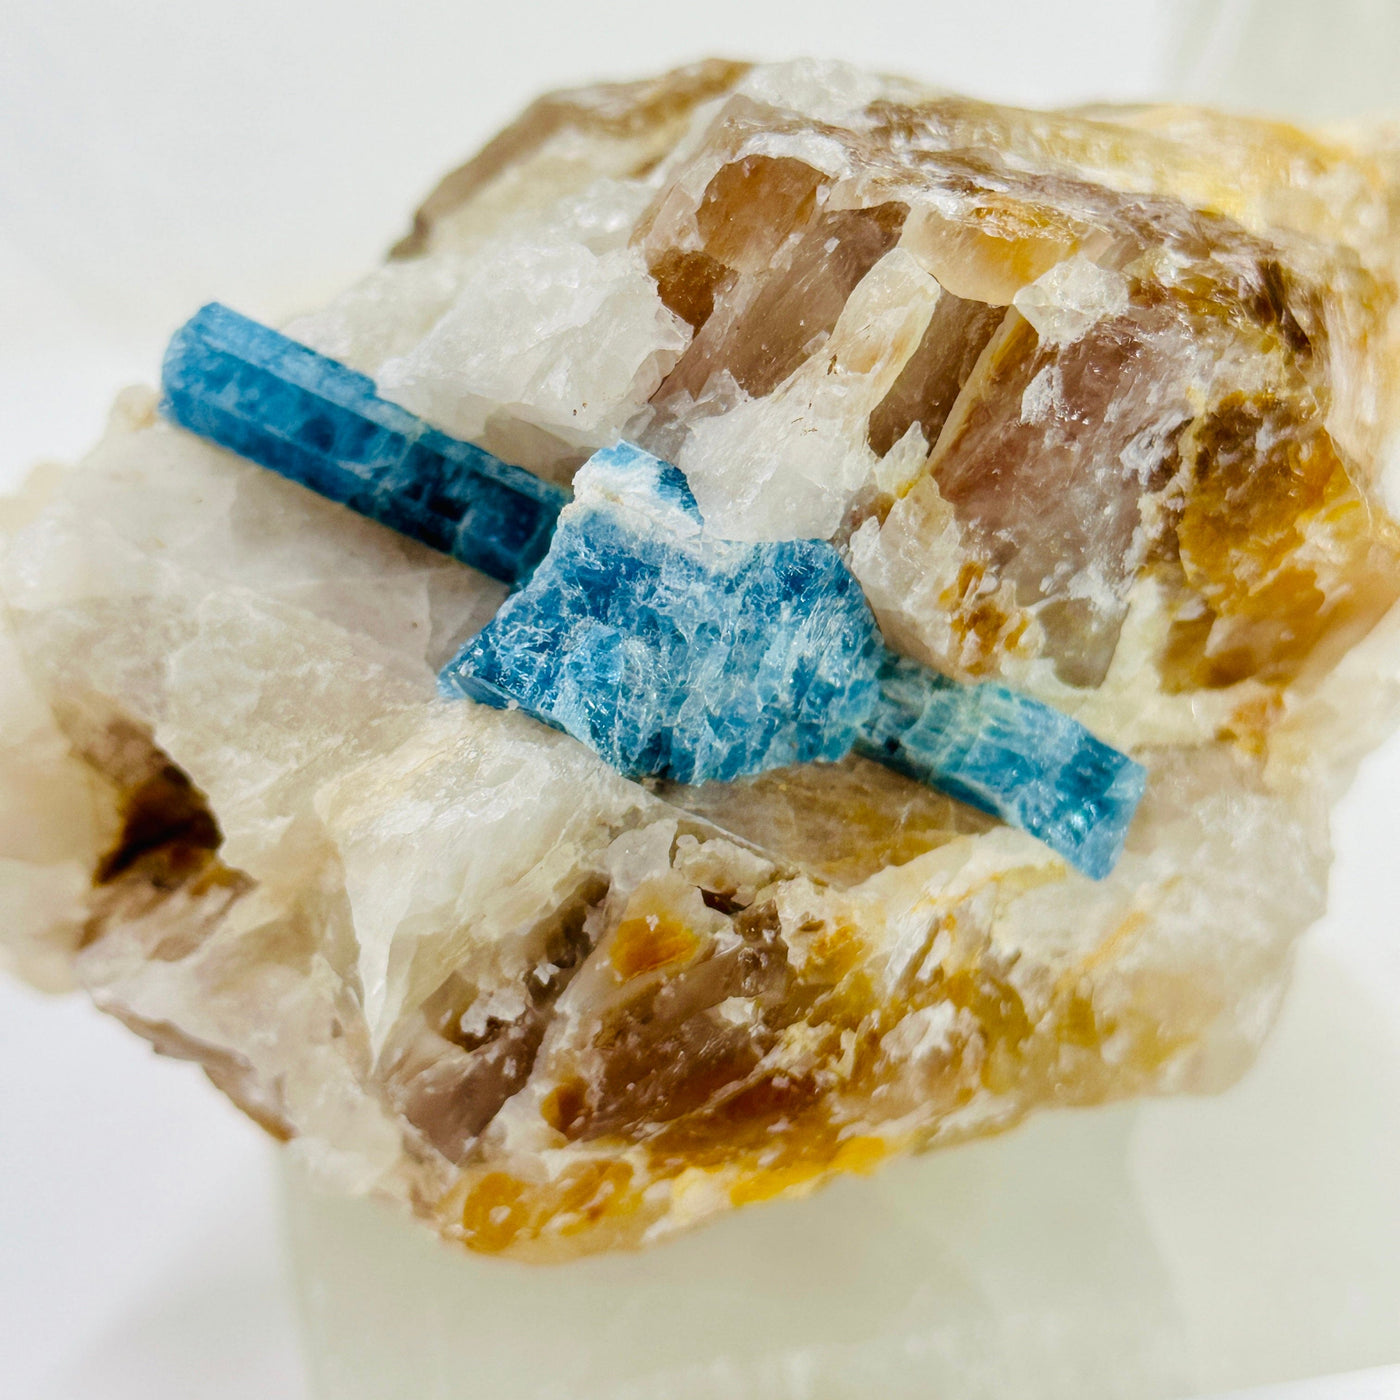 Aquamarine in matrix - aquamarine crystal embedded in large natural rough stone close up detail